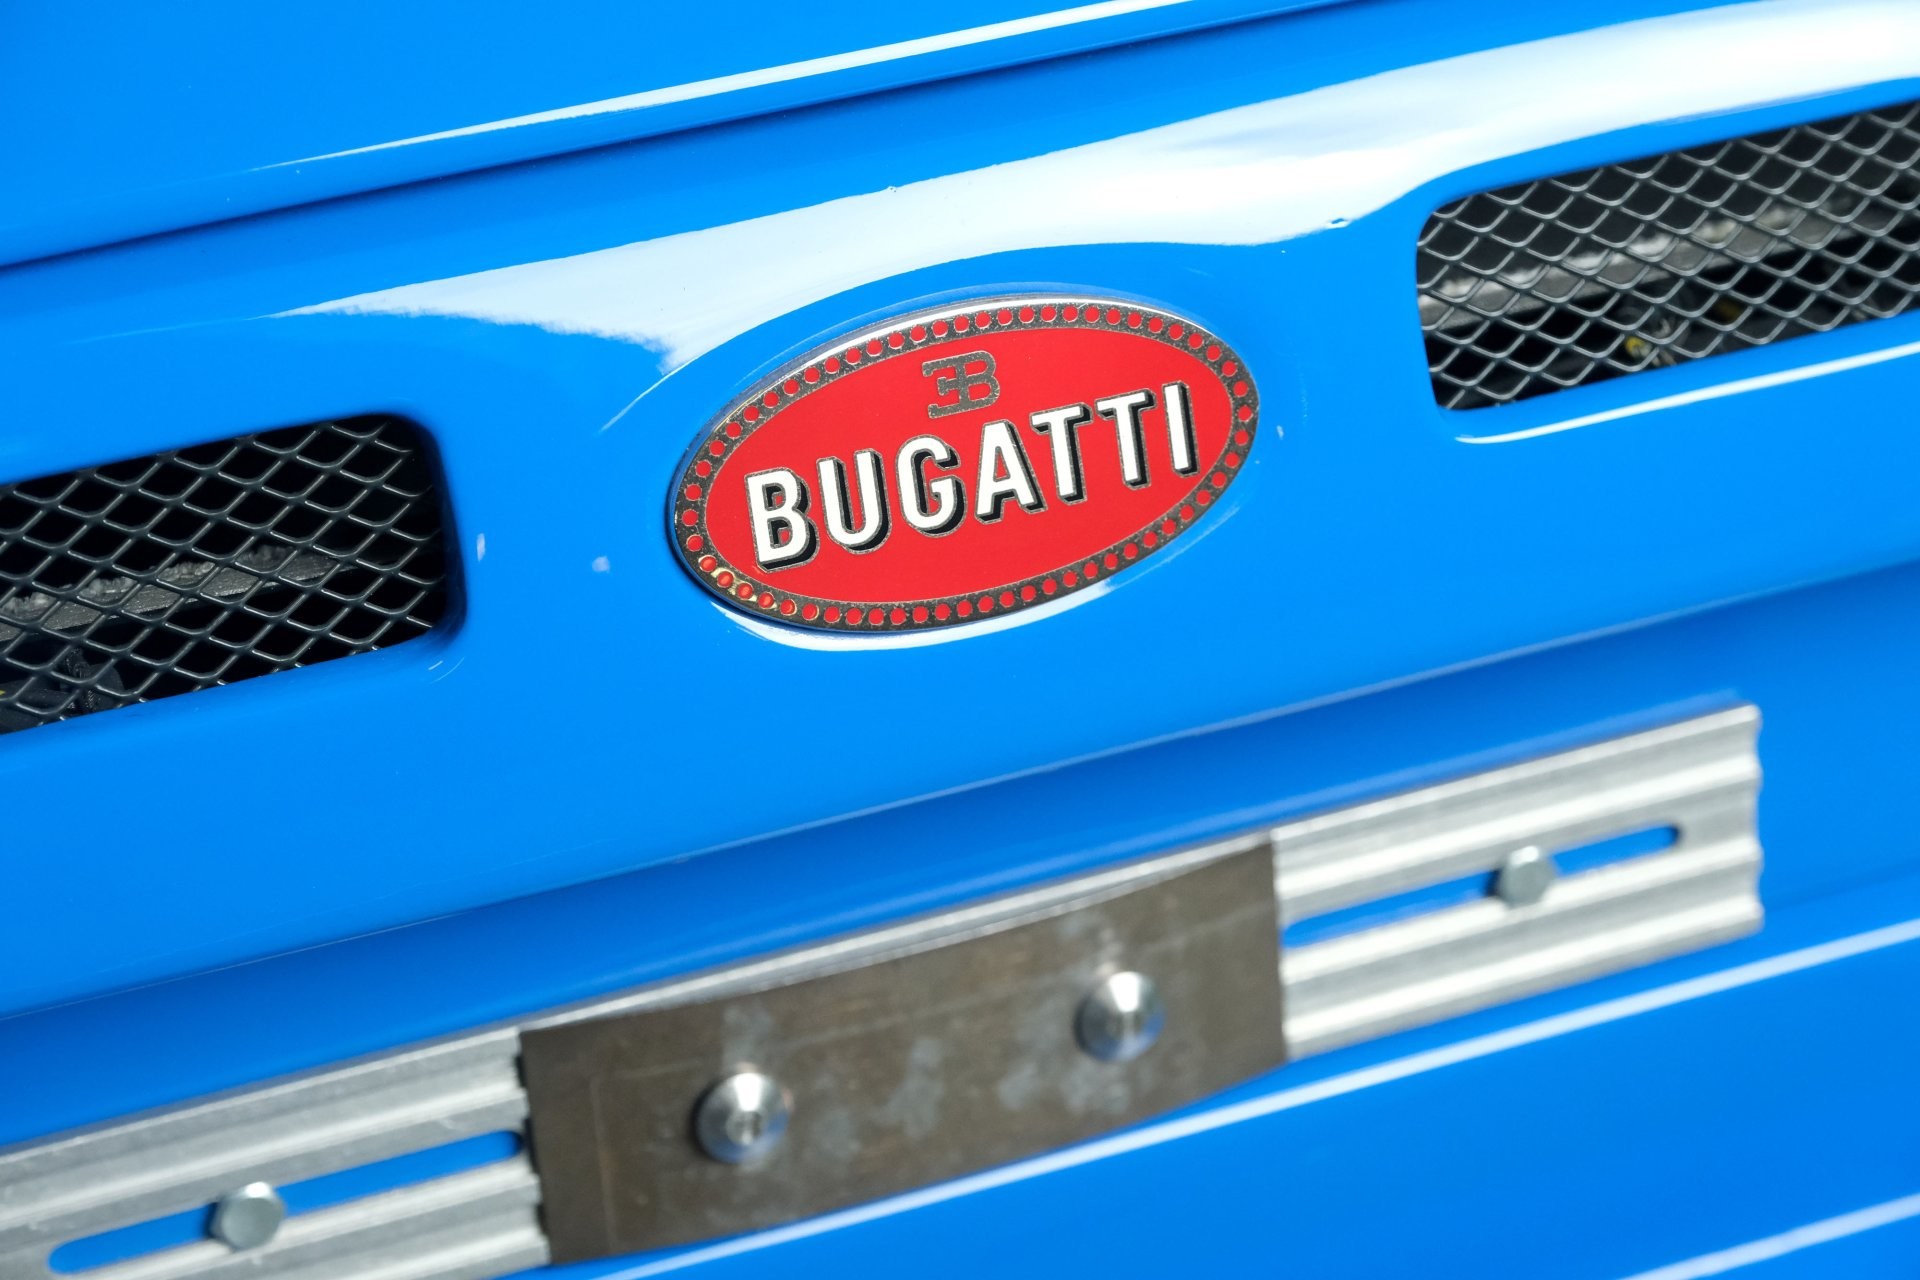 Прототип Bugatti EB110 был продан с молотка